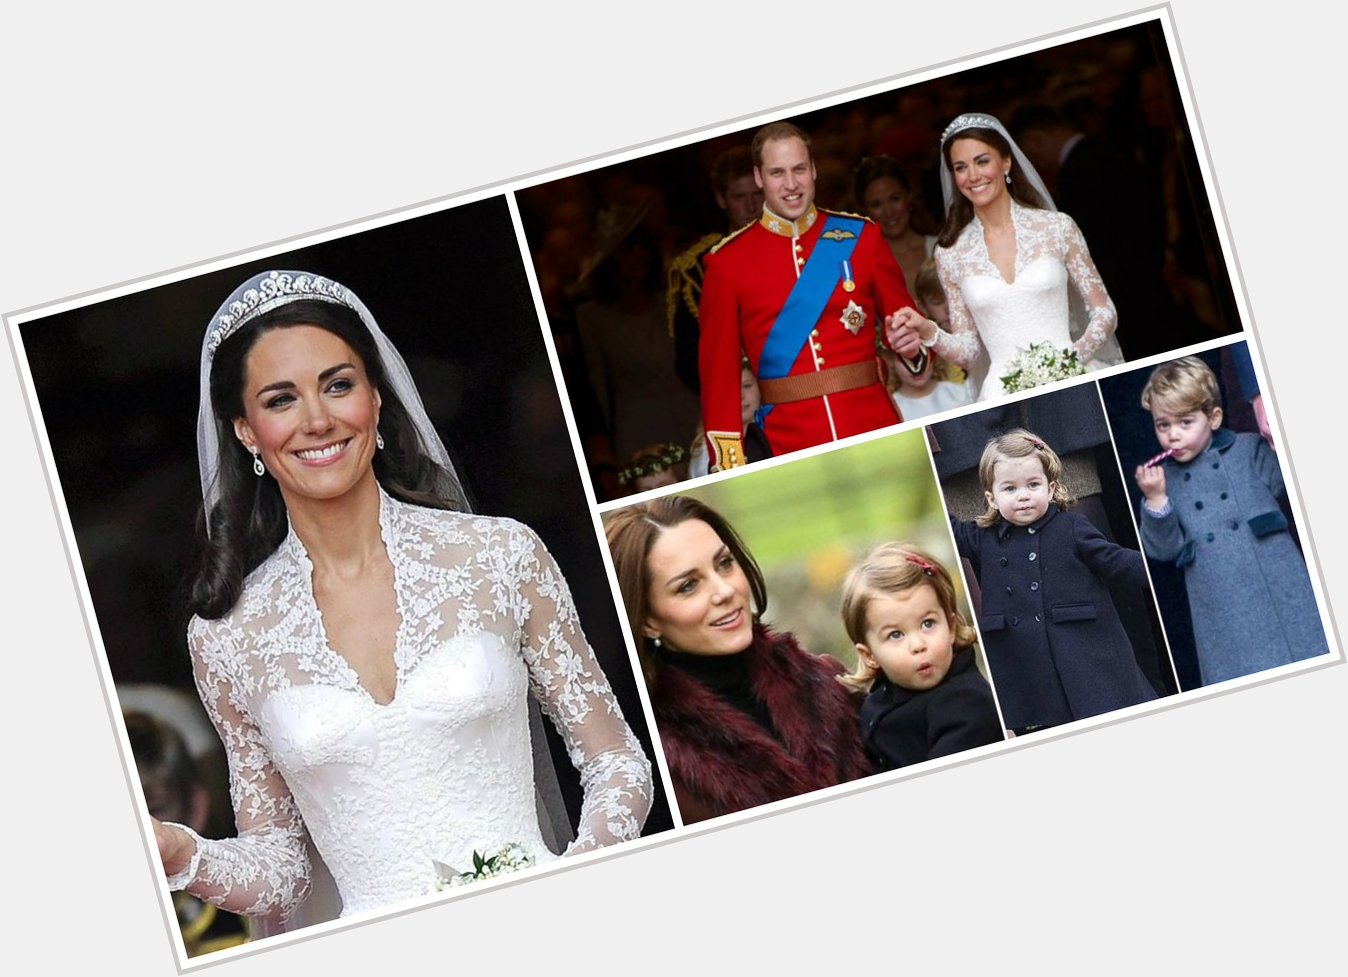 Happy 35th birthday to The Duchess of Cambridge, Kate Middleton! 